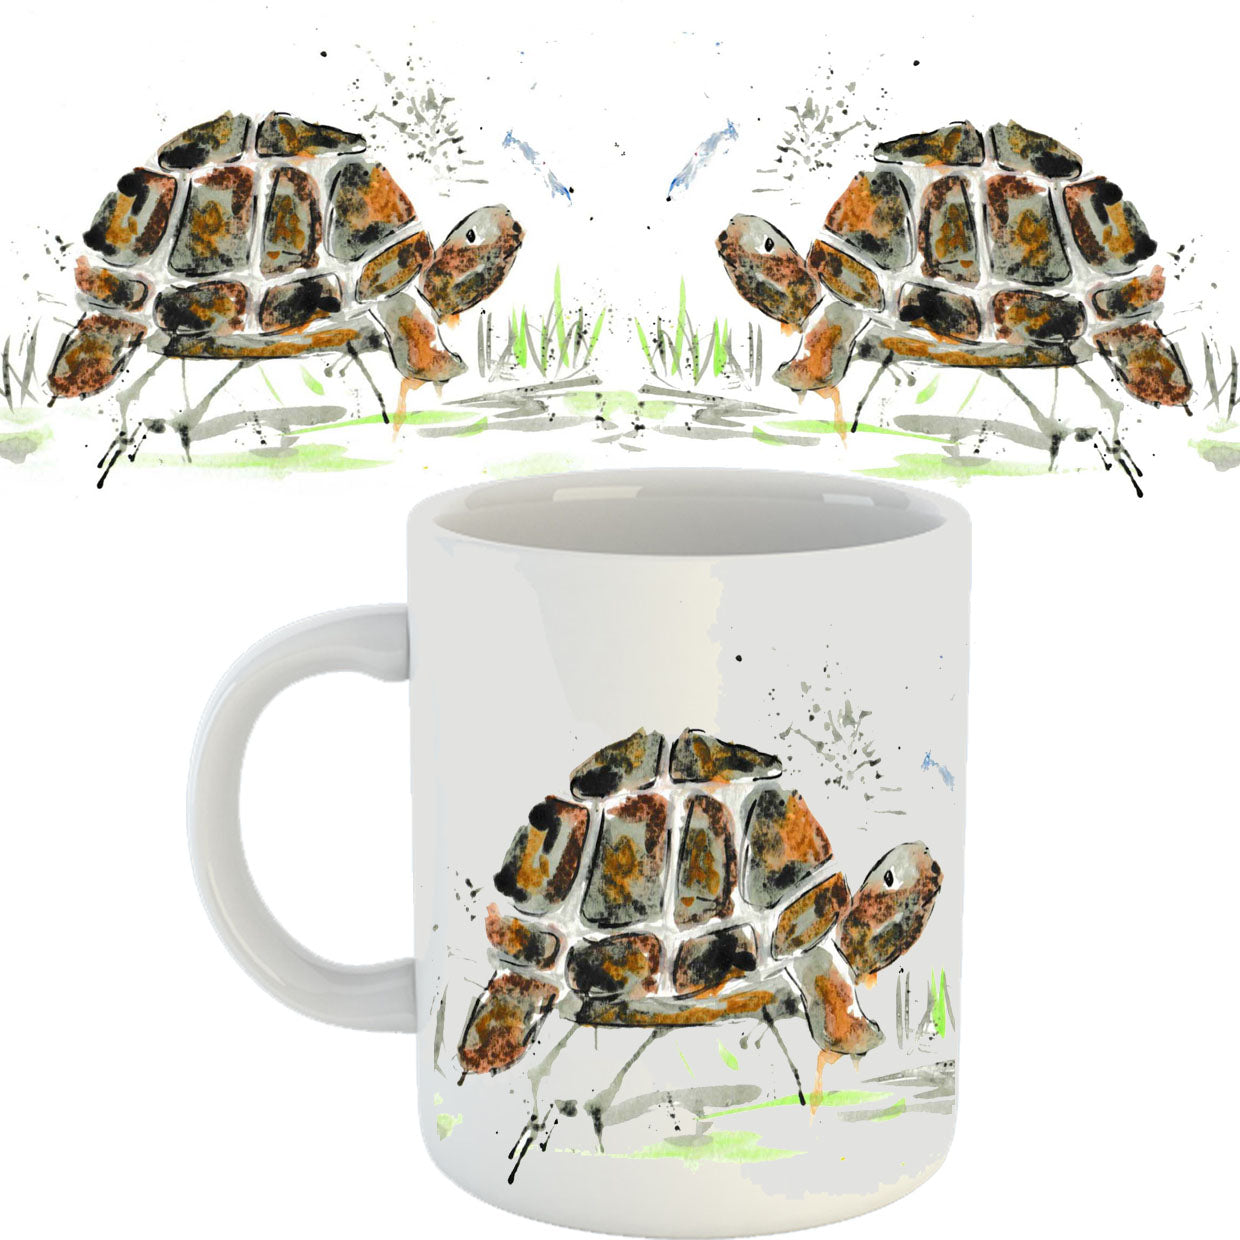 Tortoise mug